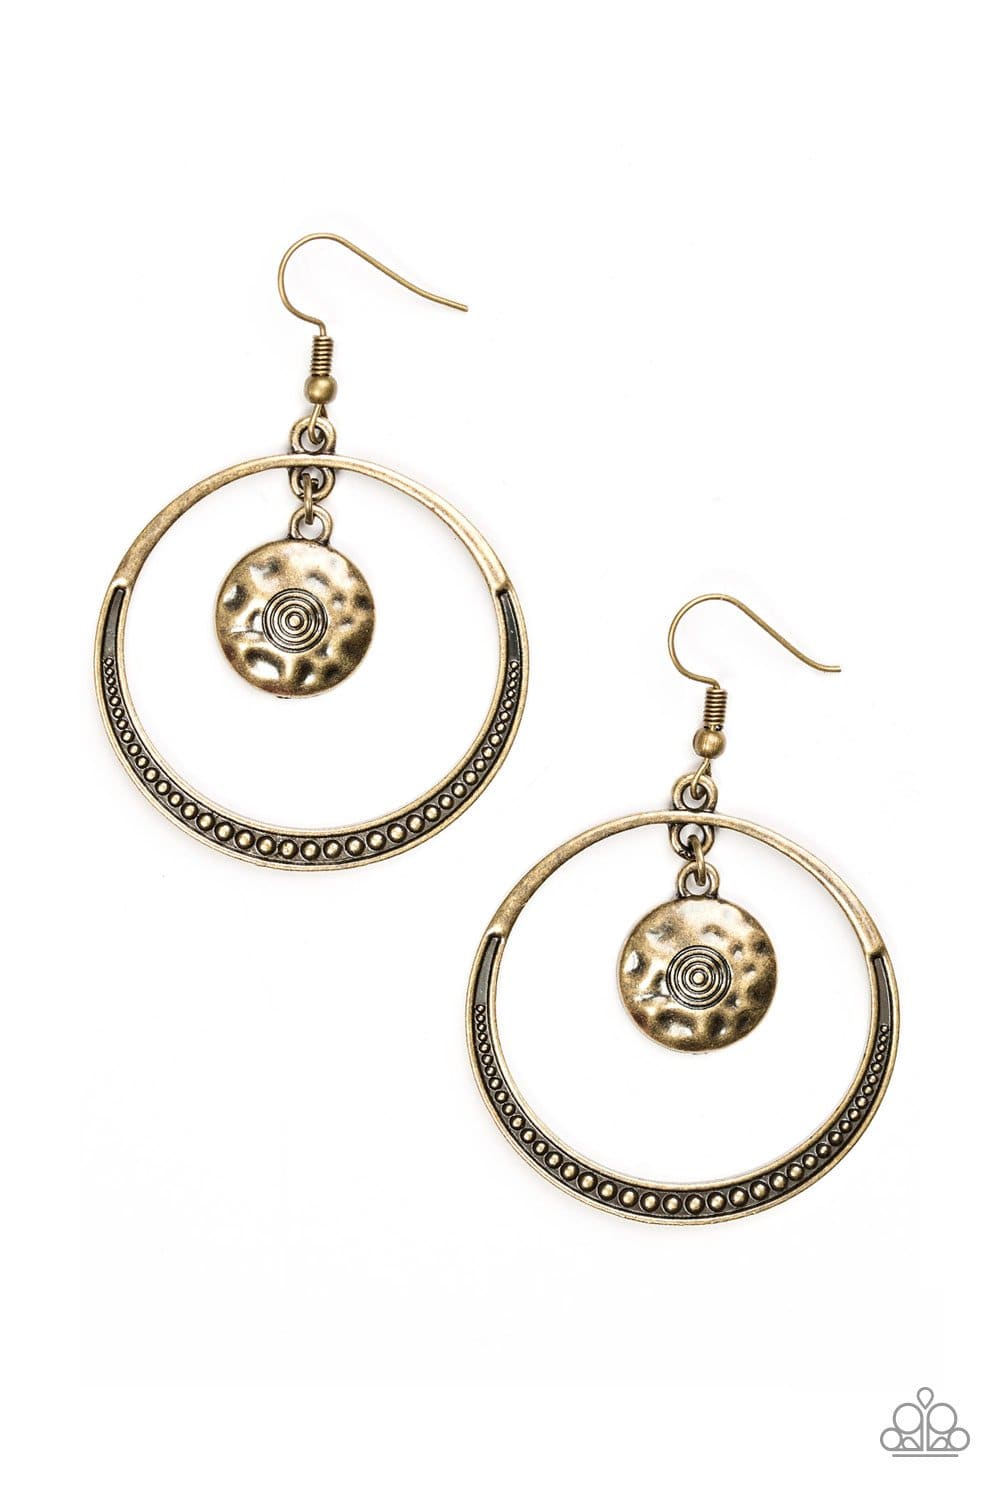 Tundra Trip - Brass Disc Hoop Earrings - Paparazzi Accessories - GlaMarous Titi Jewels